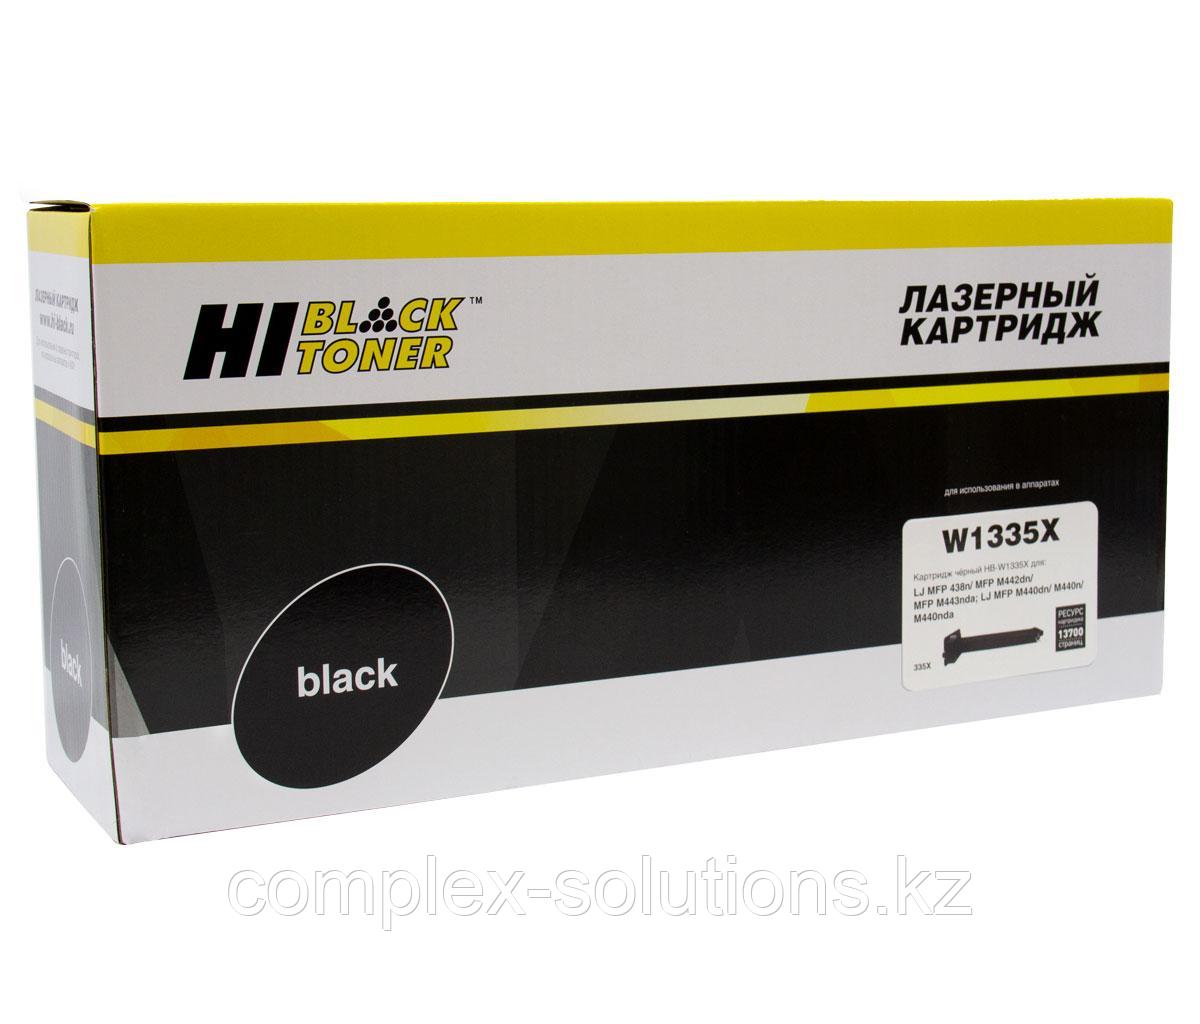 Тонер картридж Hi-Black [W1335X] для H-P LaserJet M438 | M442 | M443, 13,7K | [качественный дубликат]